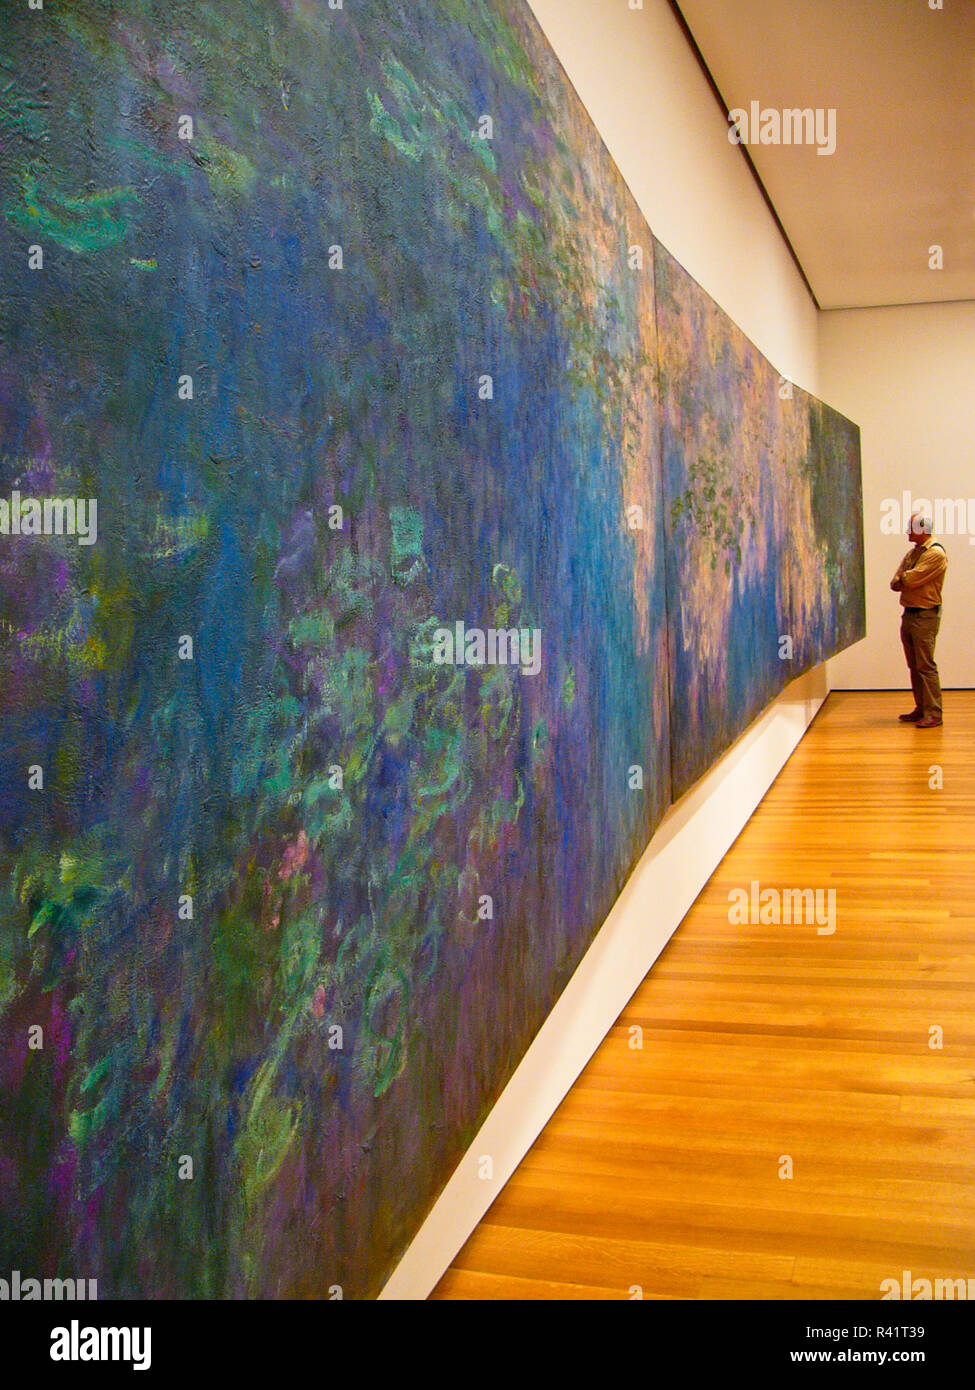 solo paraply sælger Ein Mann beobachtet Monets "Seerosen" im Museum of Modern Art (MOMA) in New  York City Stockfotografie - Alamy